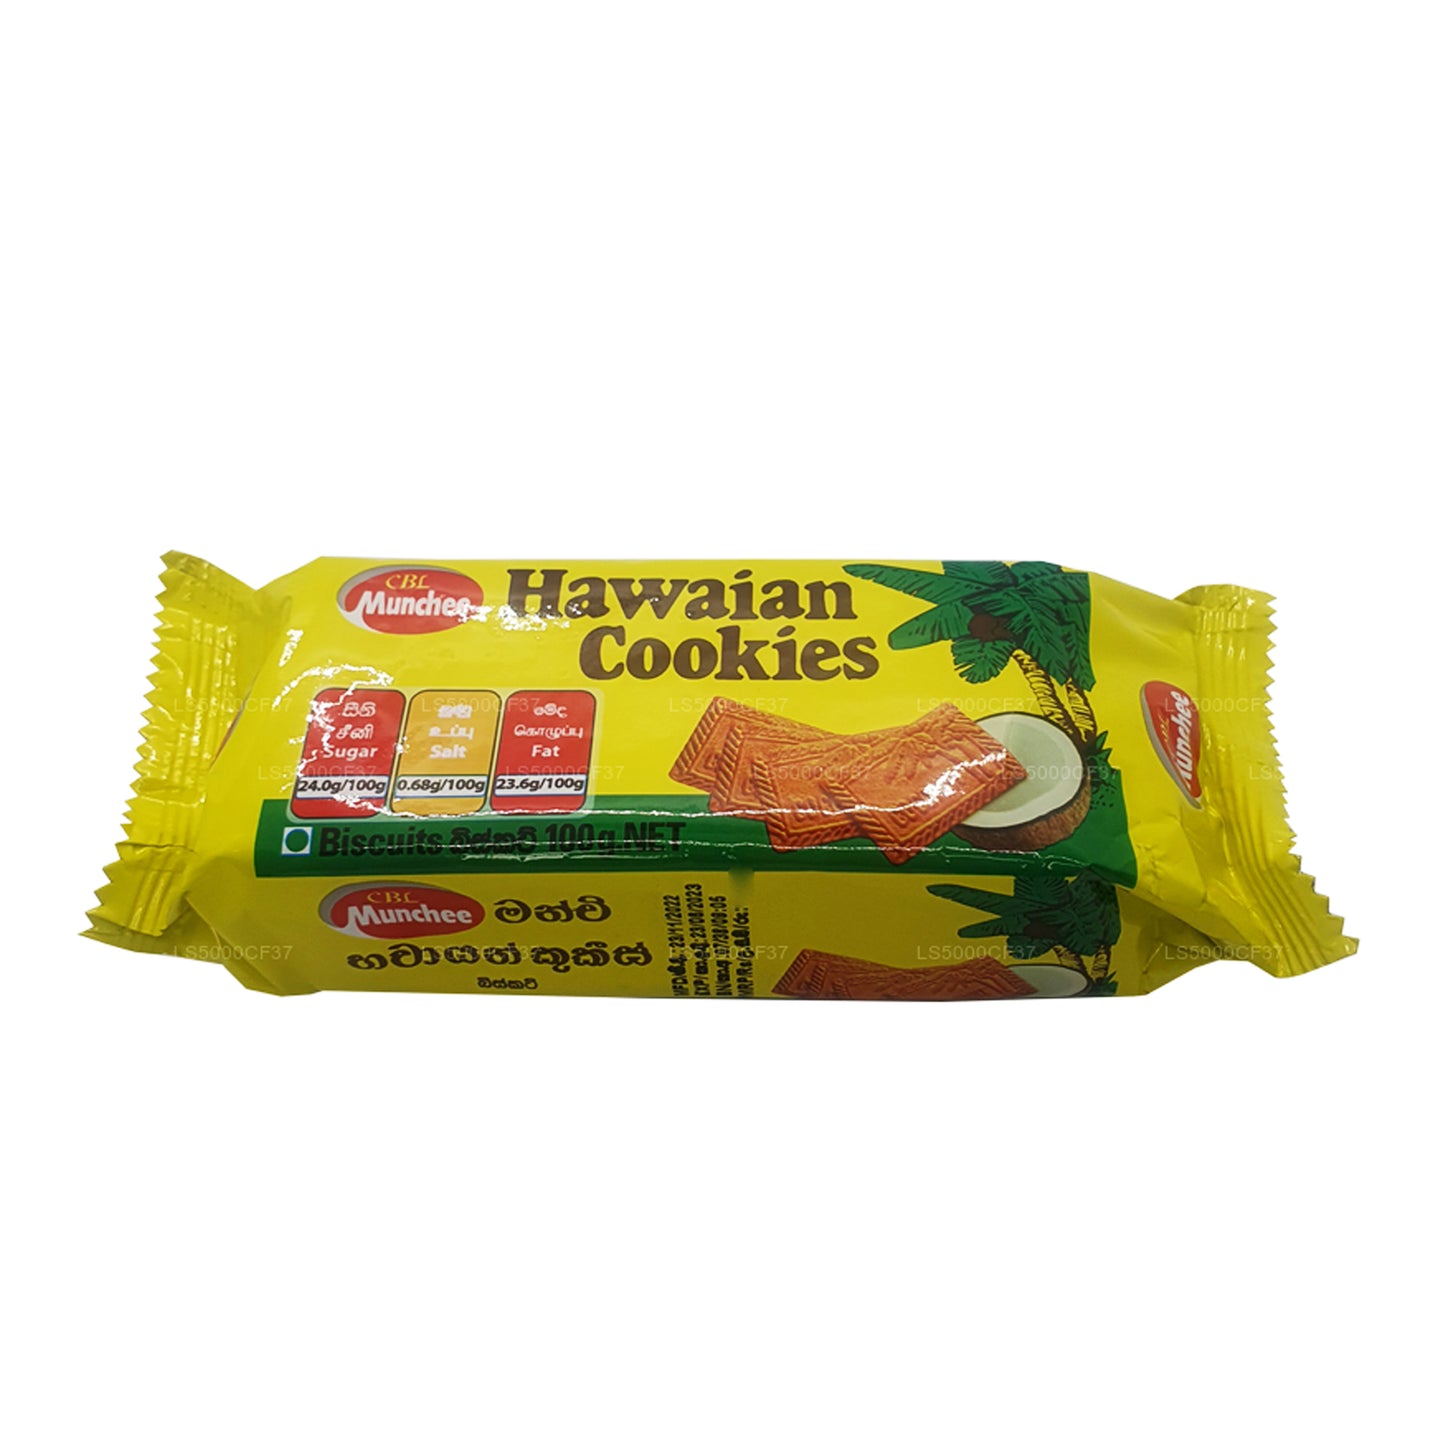 Munchee Hawaian Cookies (100g)